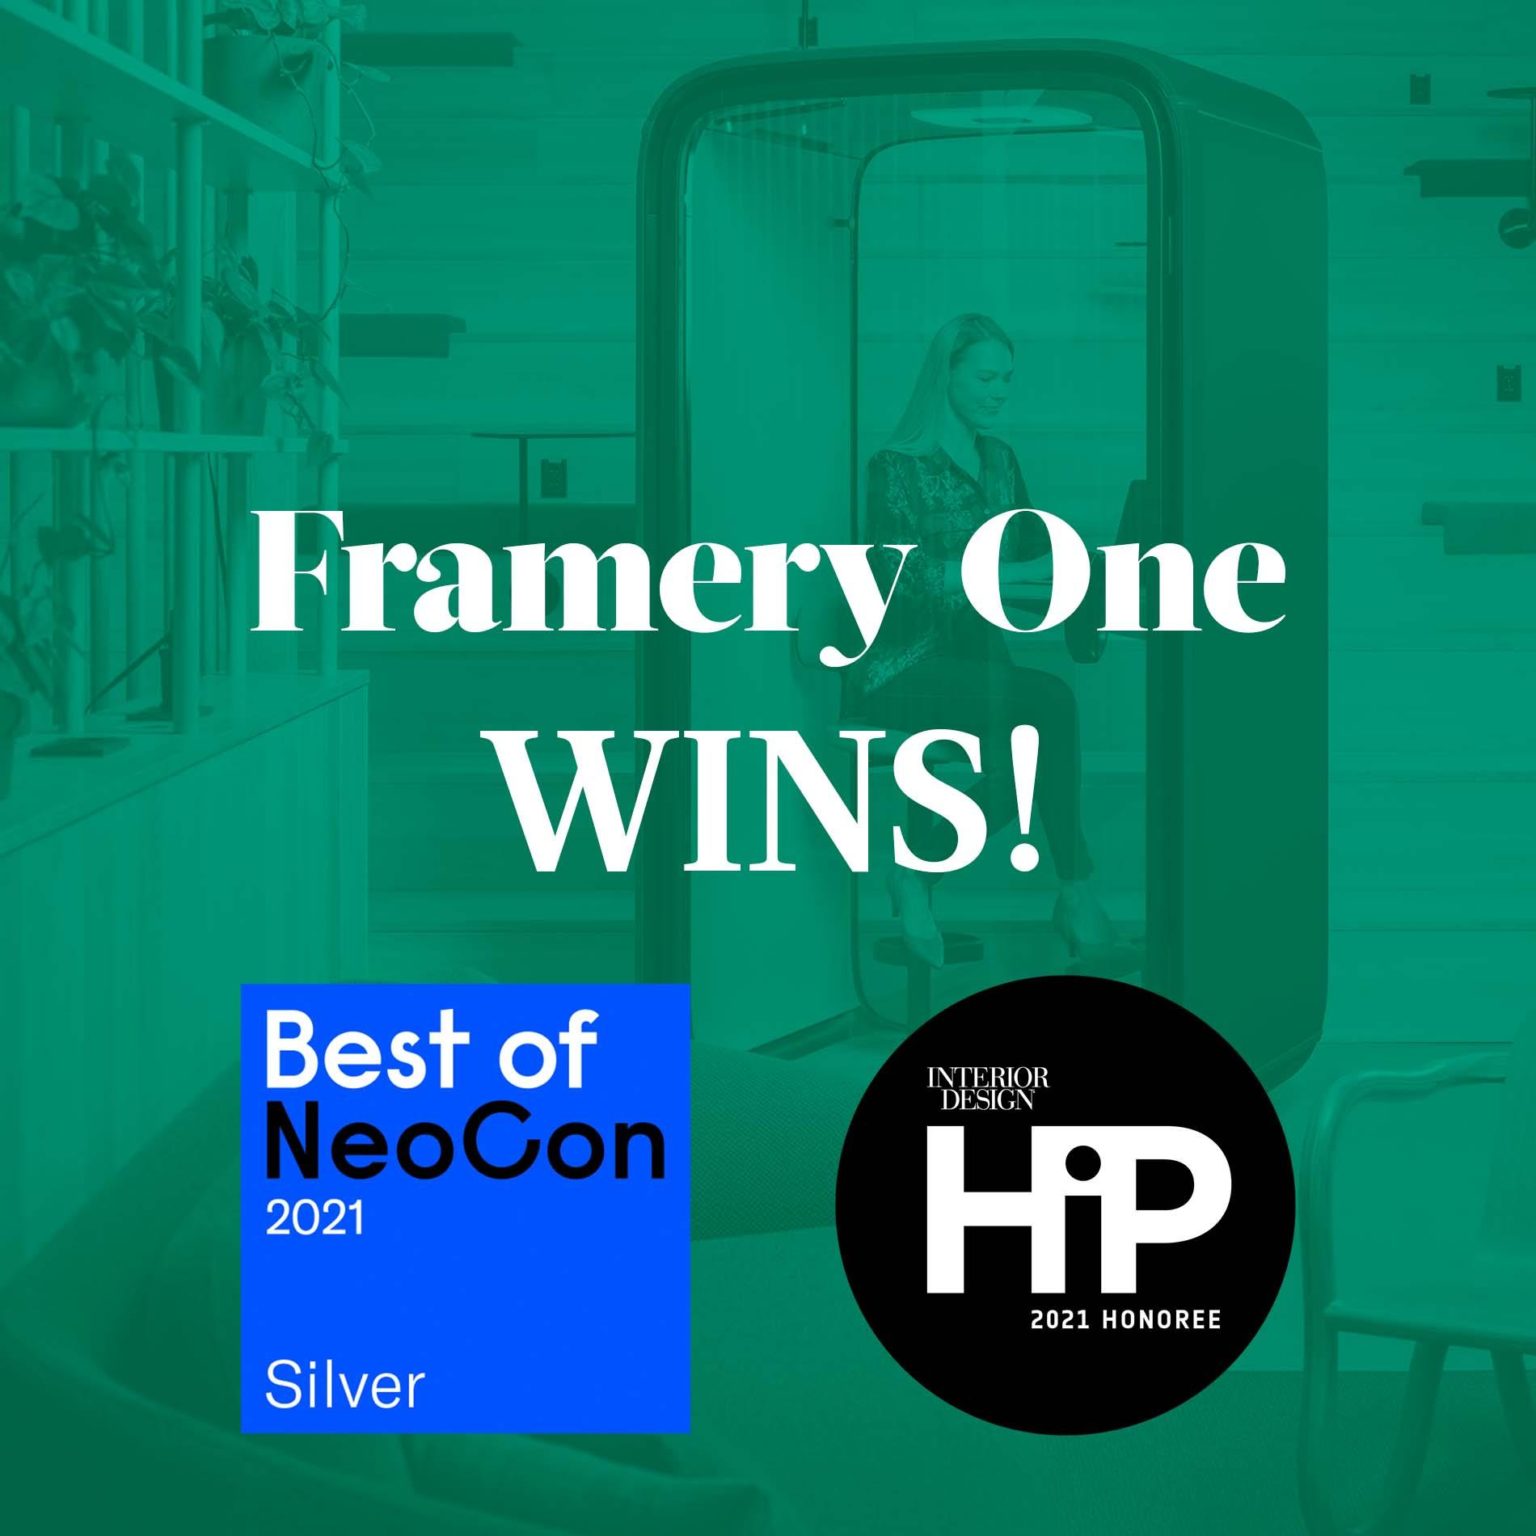 Framery Brings Home Two Award Wins from NeoCon 2021! Framery